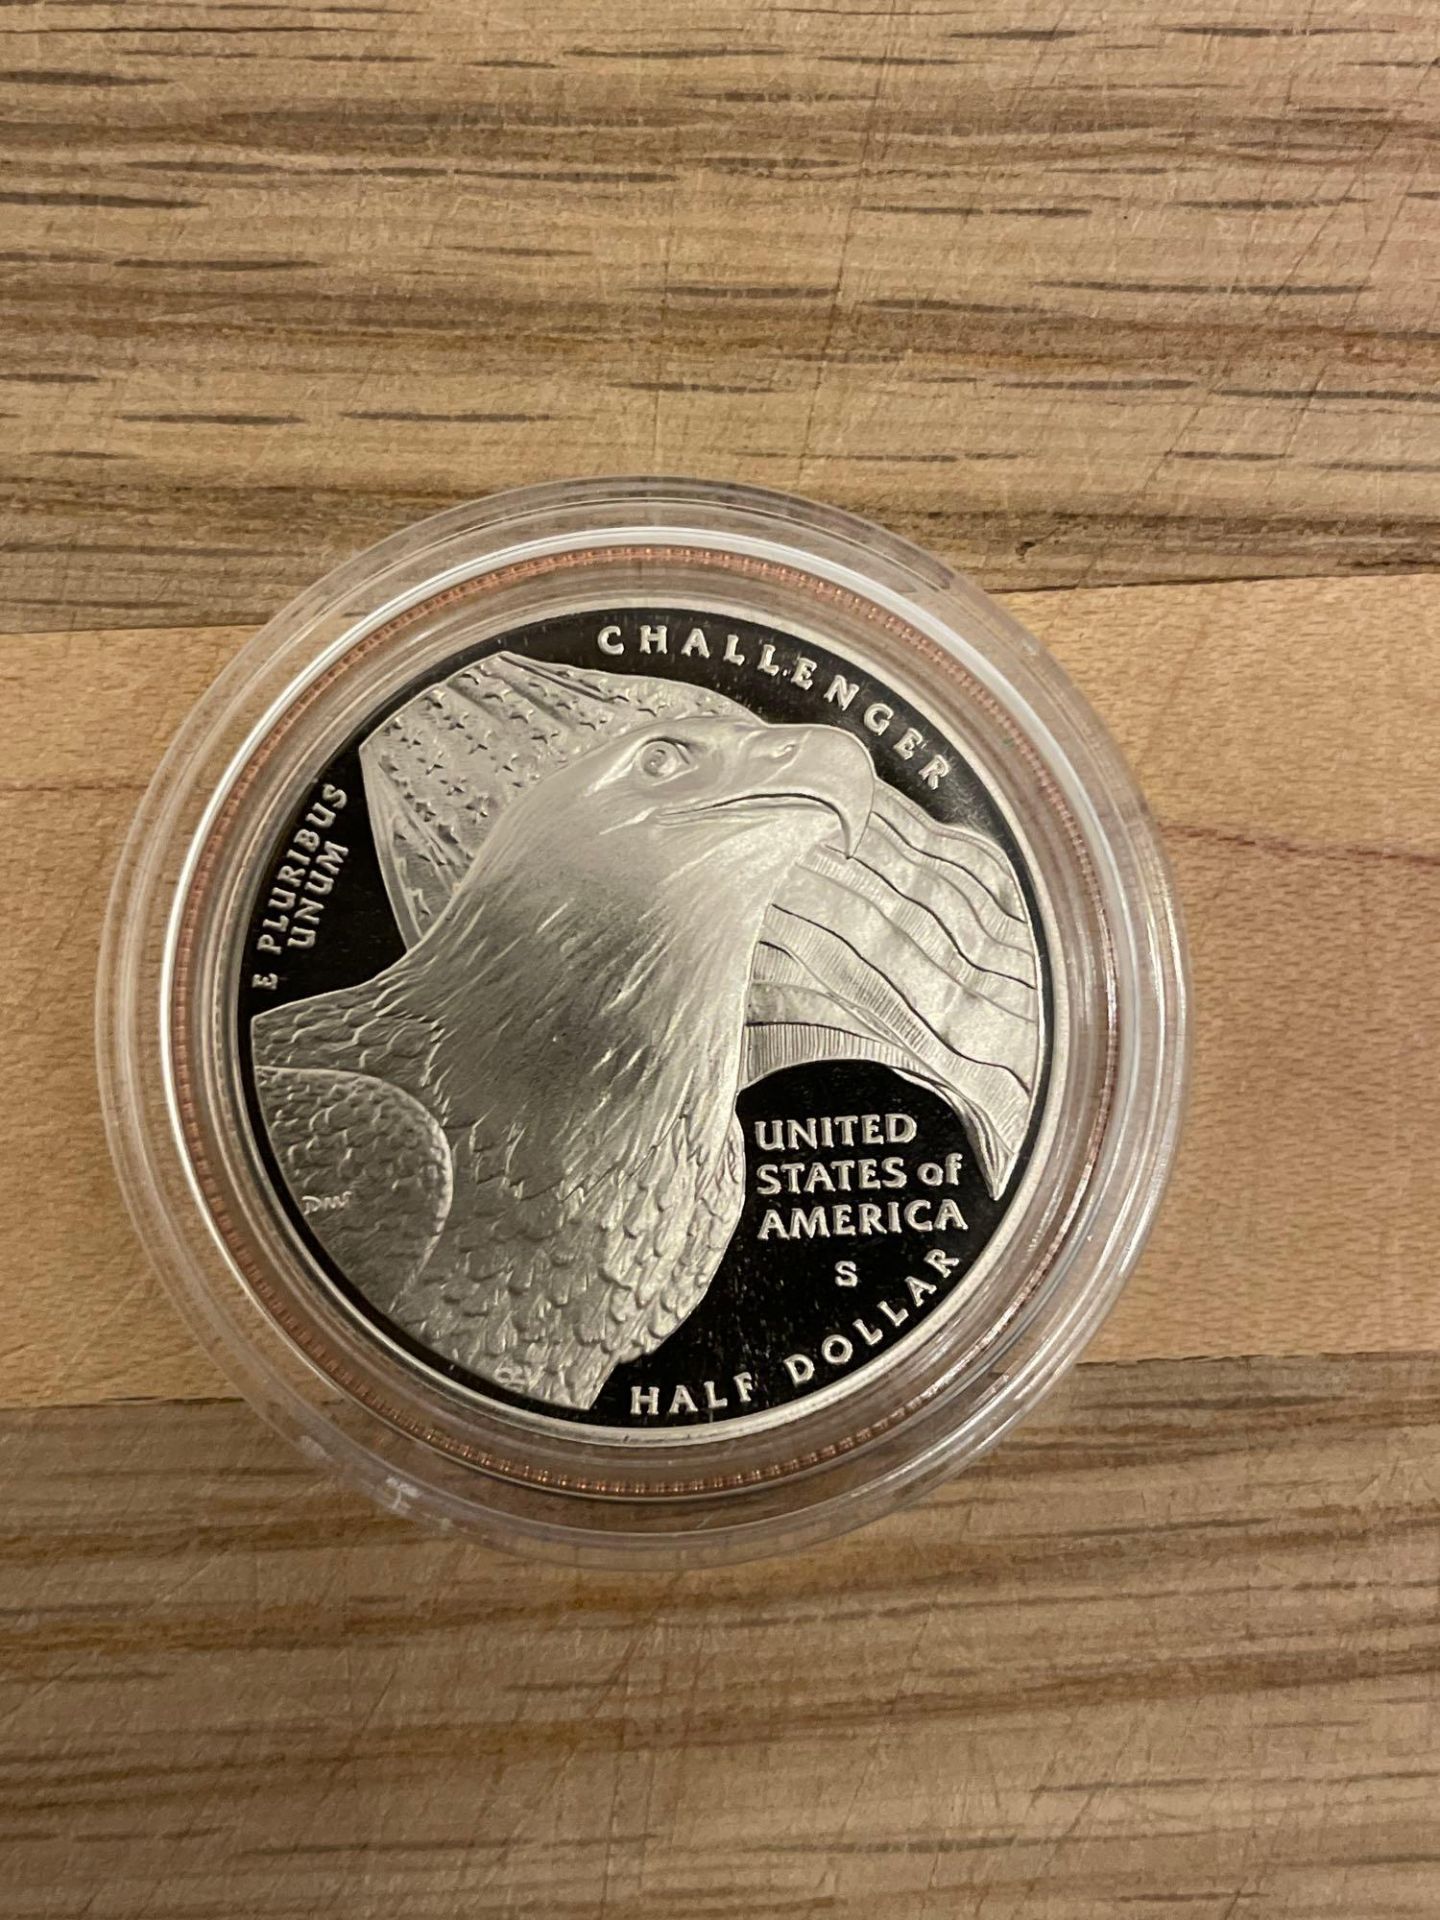 2008 bald eagle proof half dollar commemorative coin - Image 3 of 5